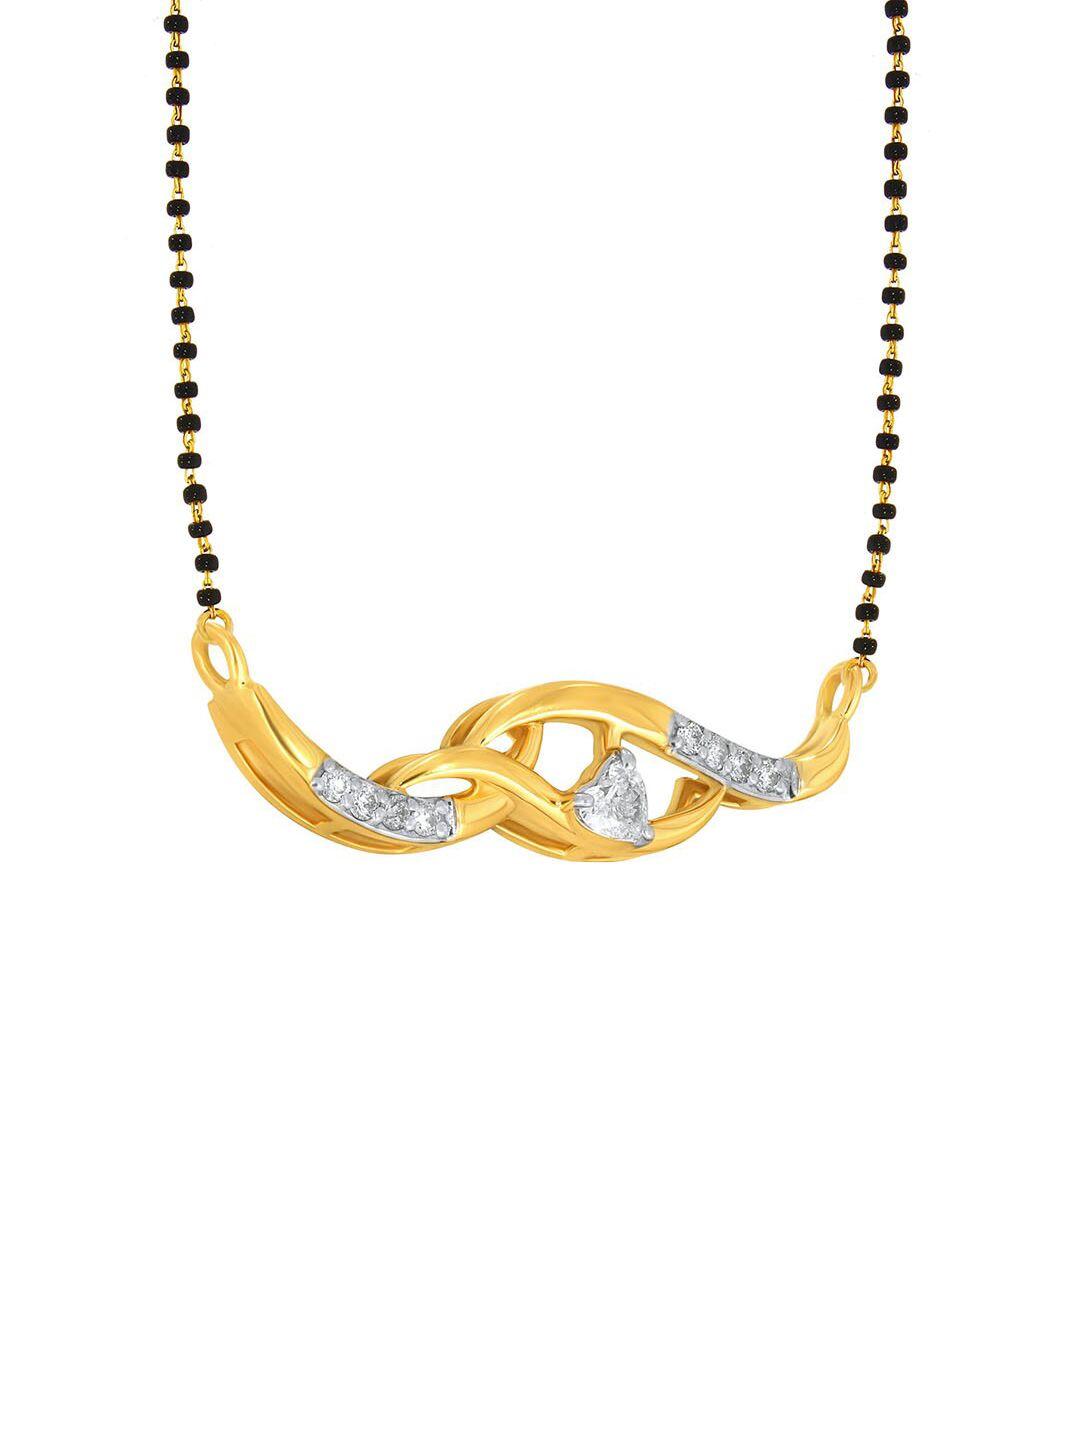 senco-affectionate-waves-18kt-gold-diamond-studded-mangalsutra-pendant-2.3gm